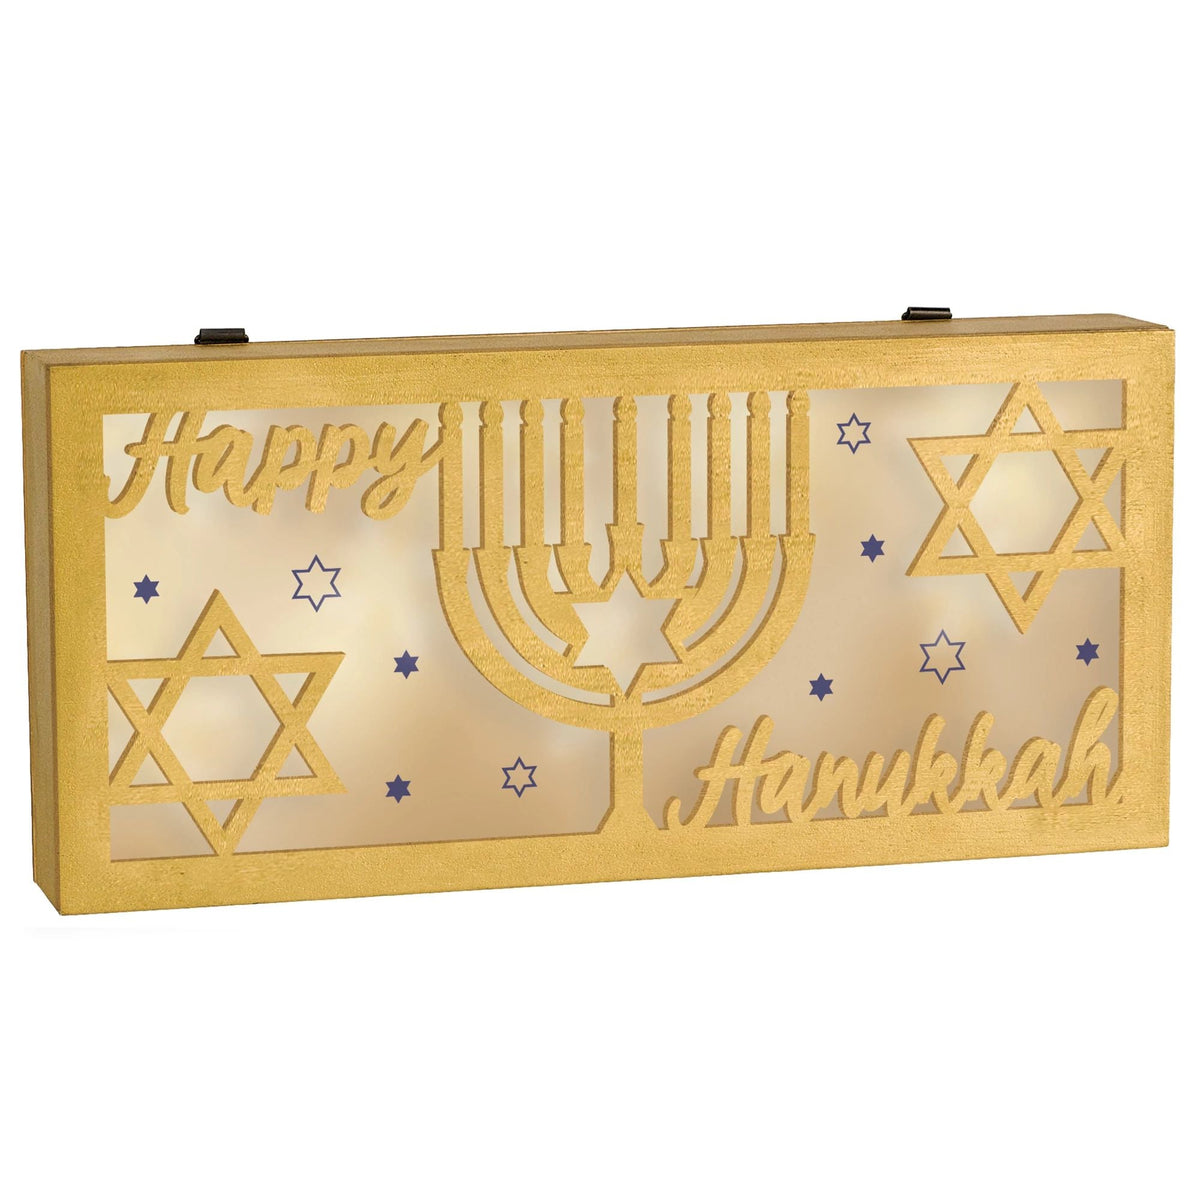 AMSCAN CA Hanukkah Hanukkah Festival of Light Wooden Light Up Decoration, 5 X 11 Inches